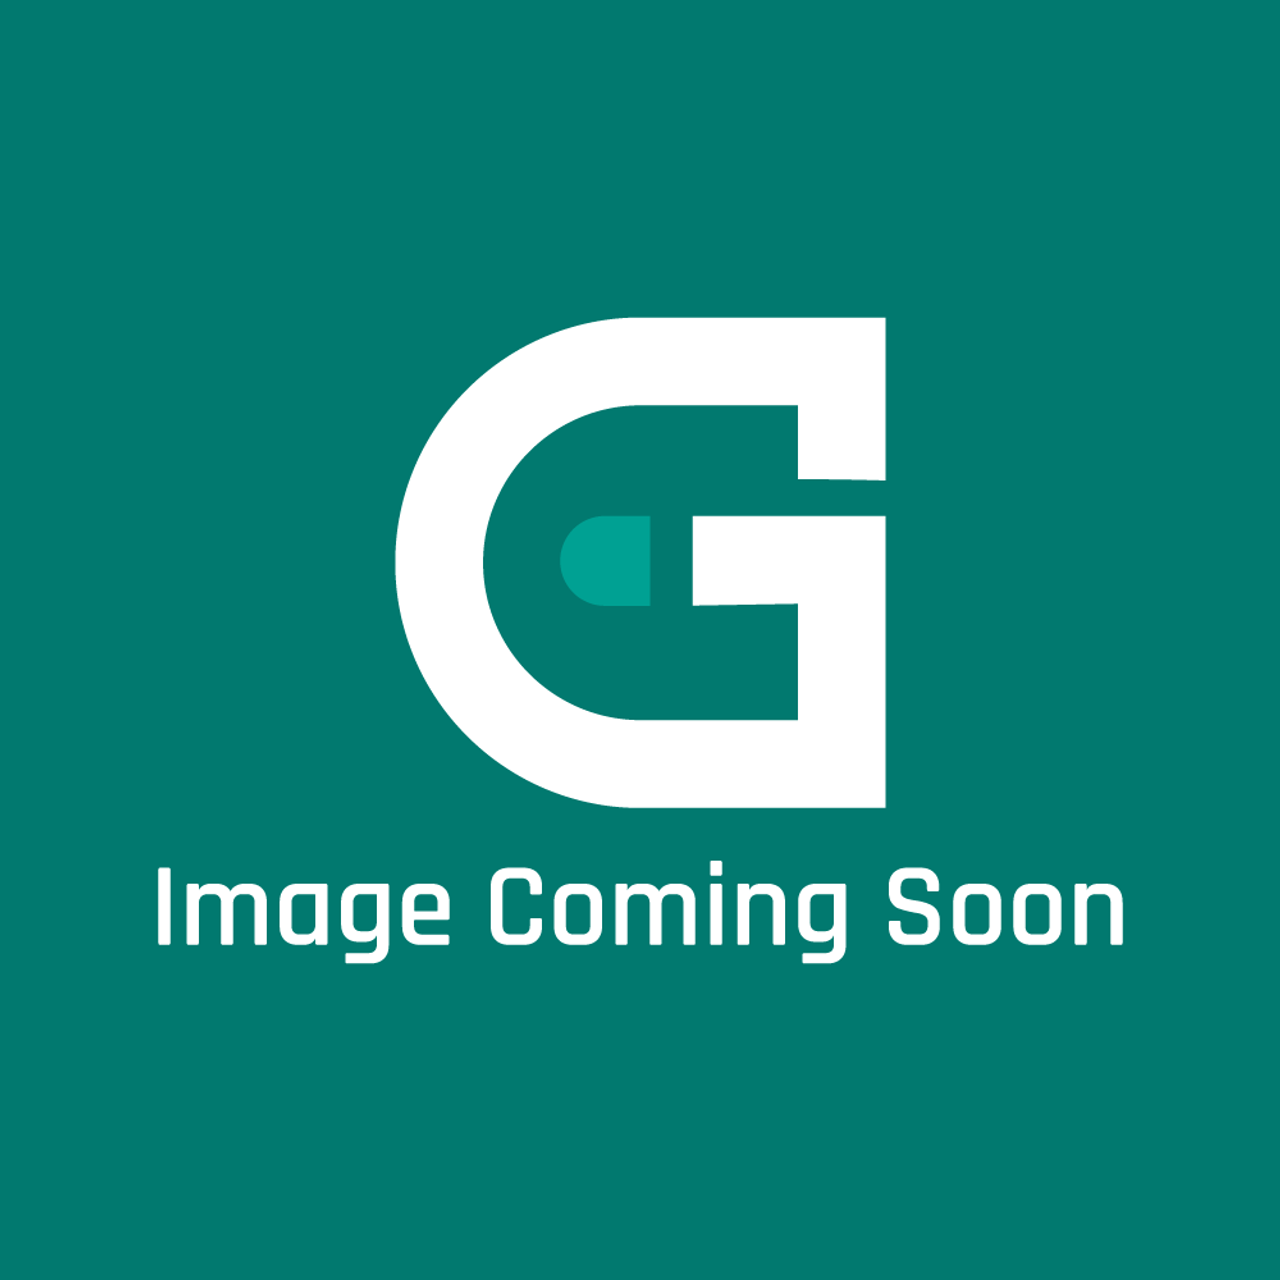 AGA Marvel JGSG344254 - Roasting Oven Rear Flue Duct Gasket - R6 - Image Coming Soon!